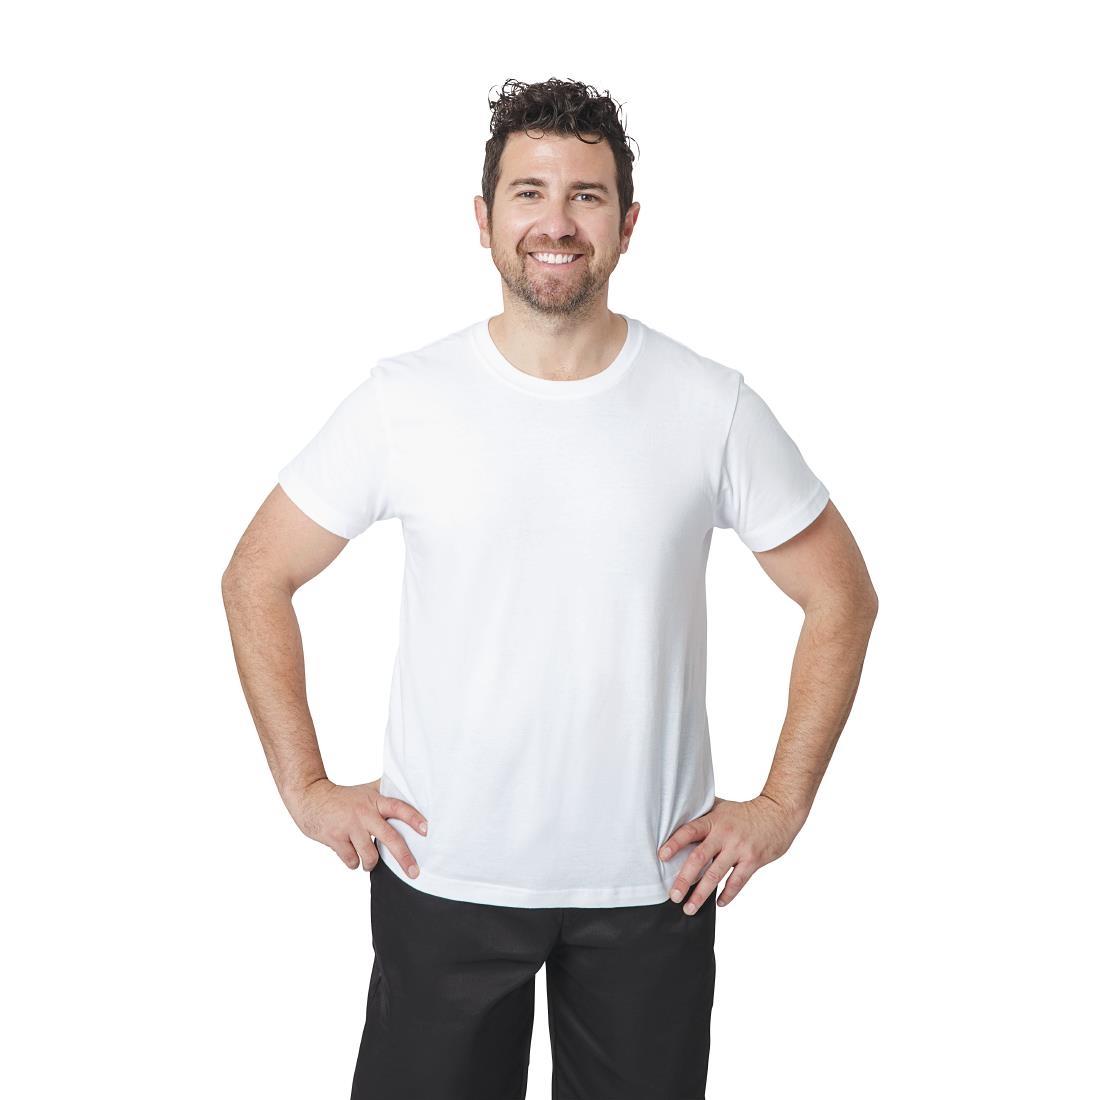 Unisex Chef T-Shirt White L - A103-L  - 1